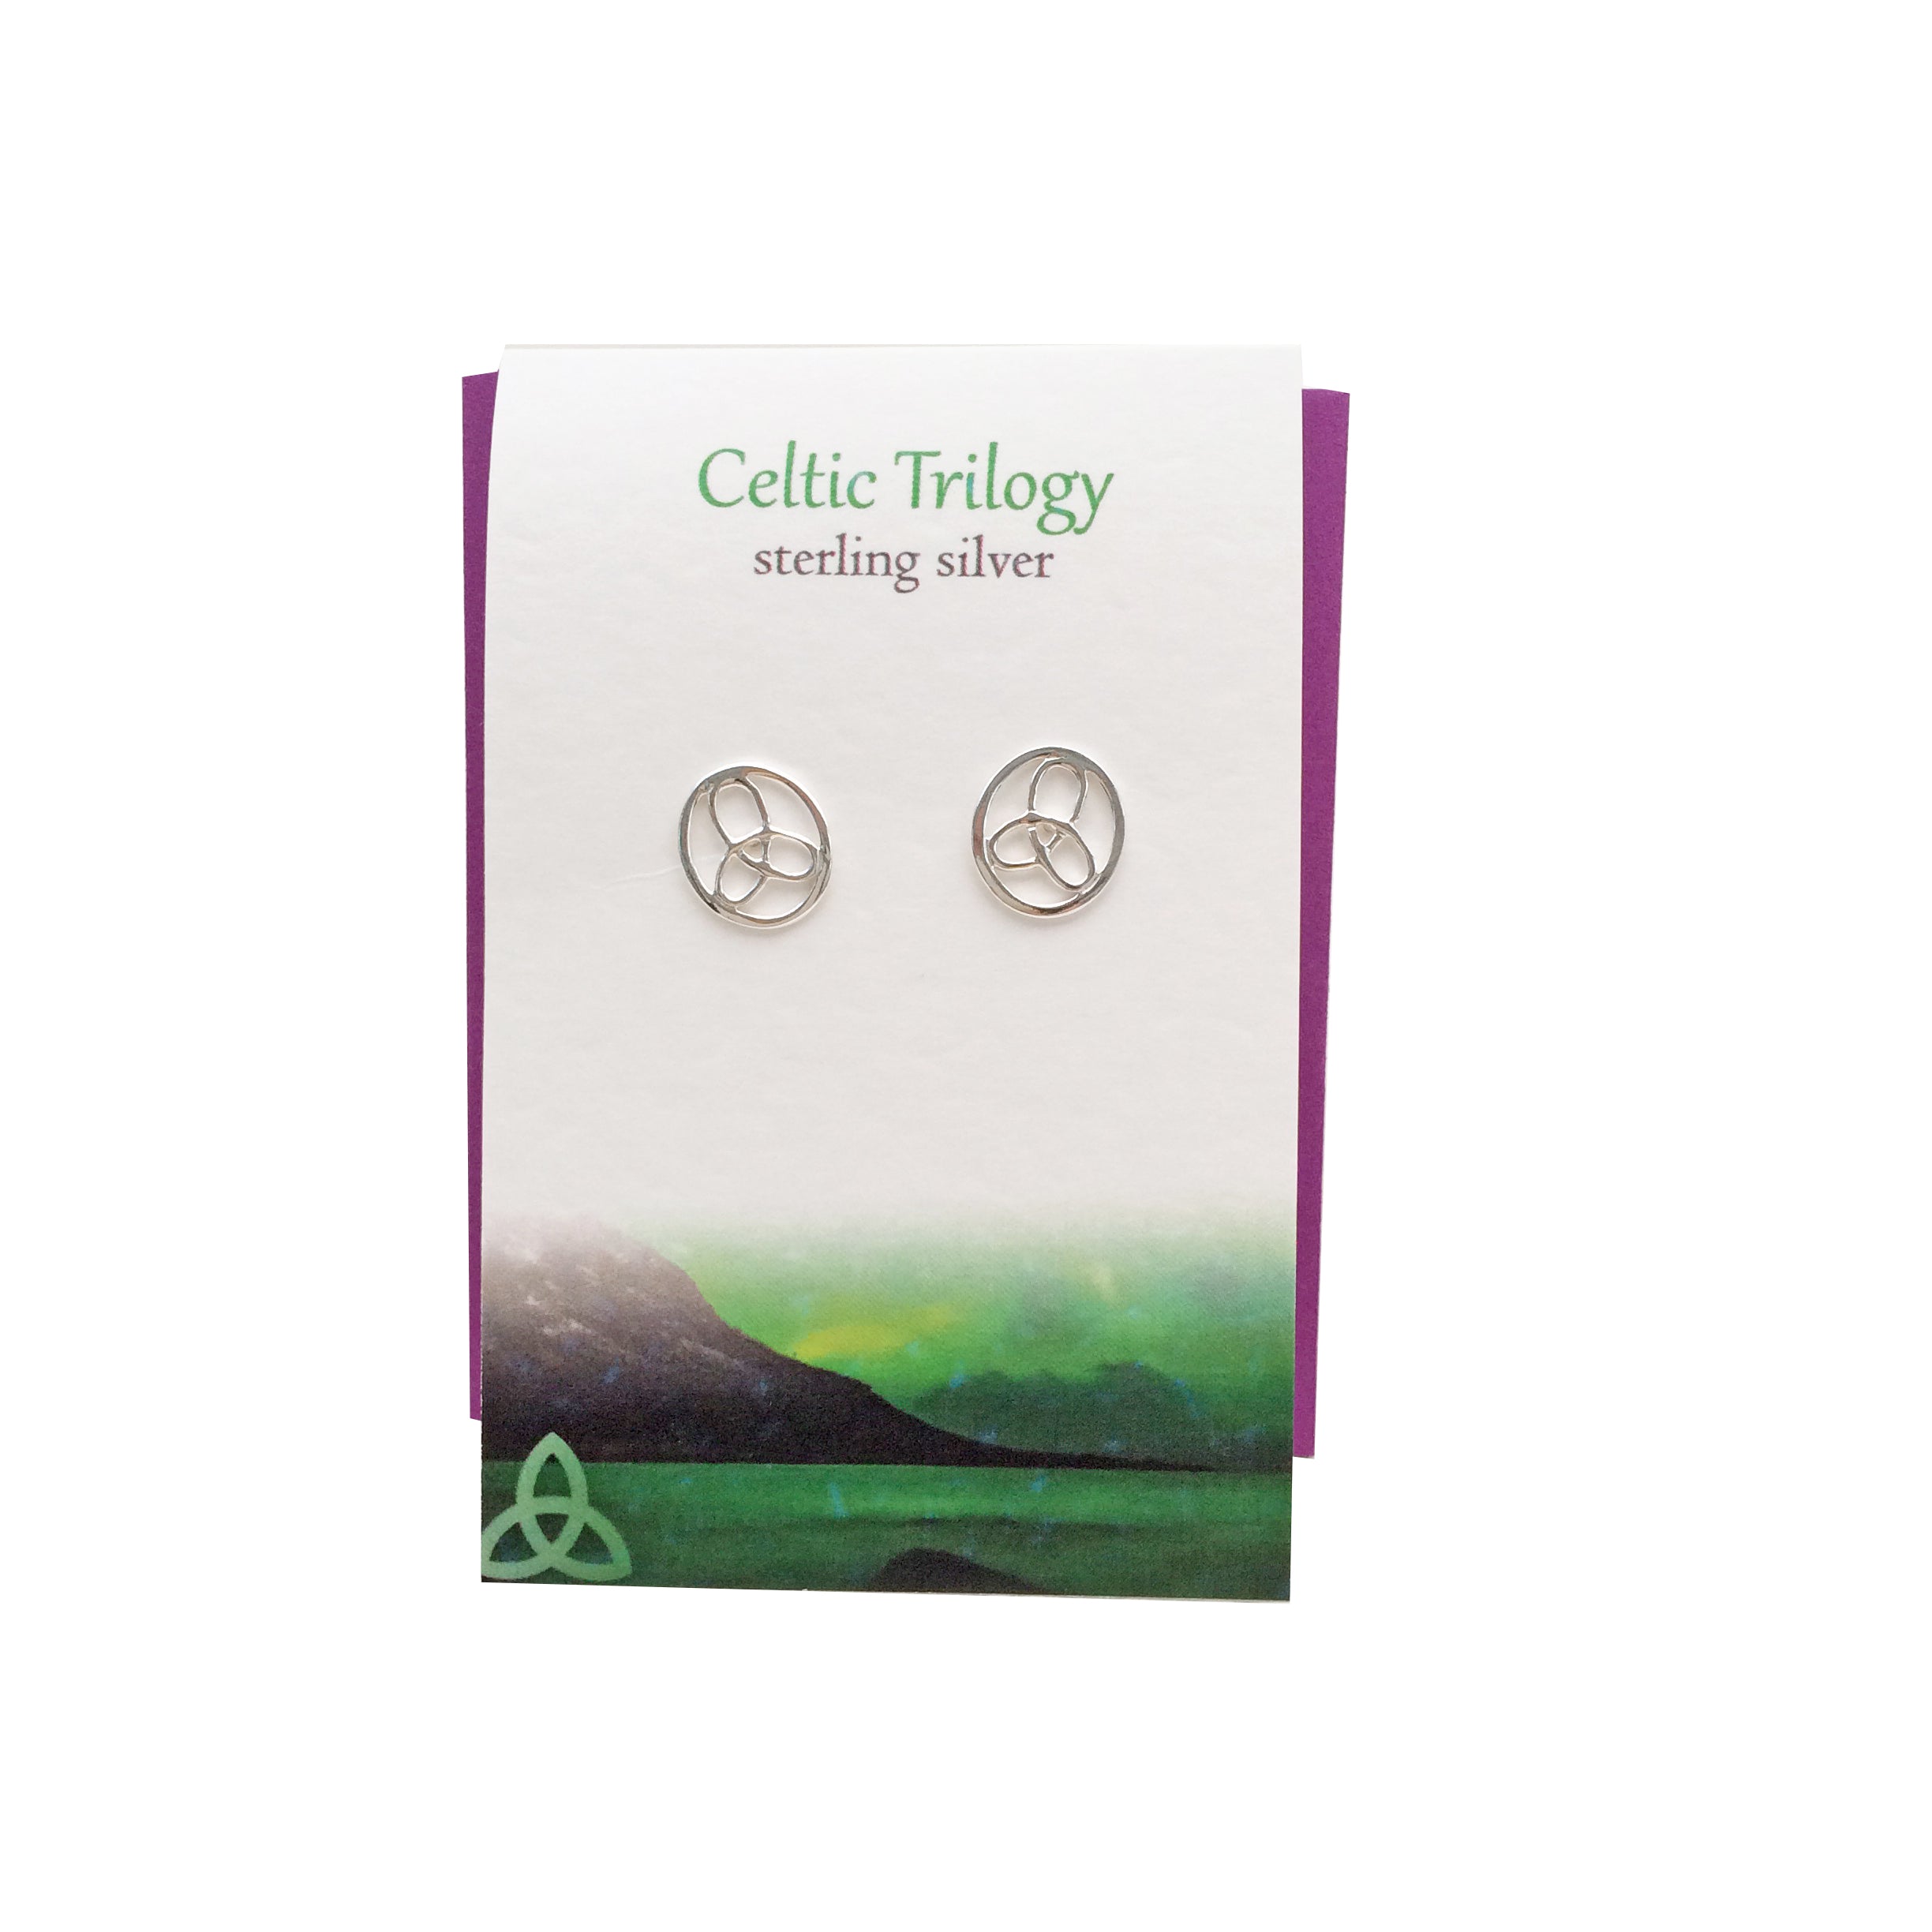 Celtic Trilogy silver stud earrings| The Silver Studio Scotland